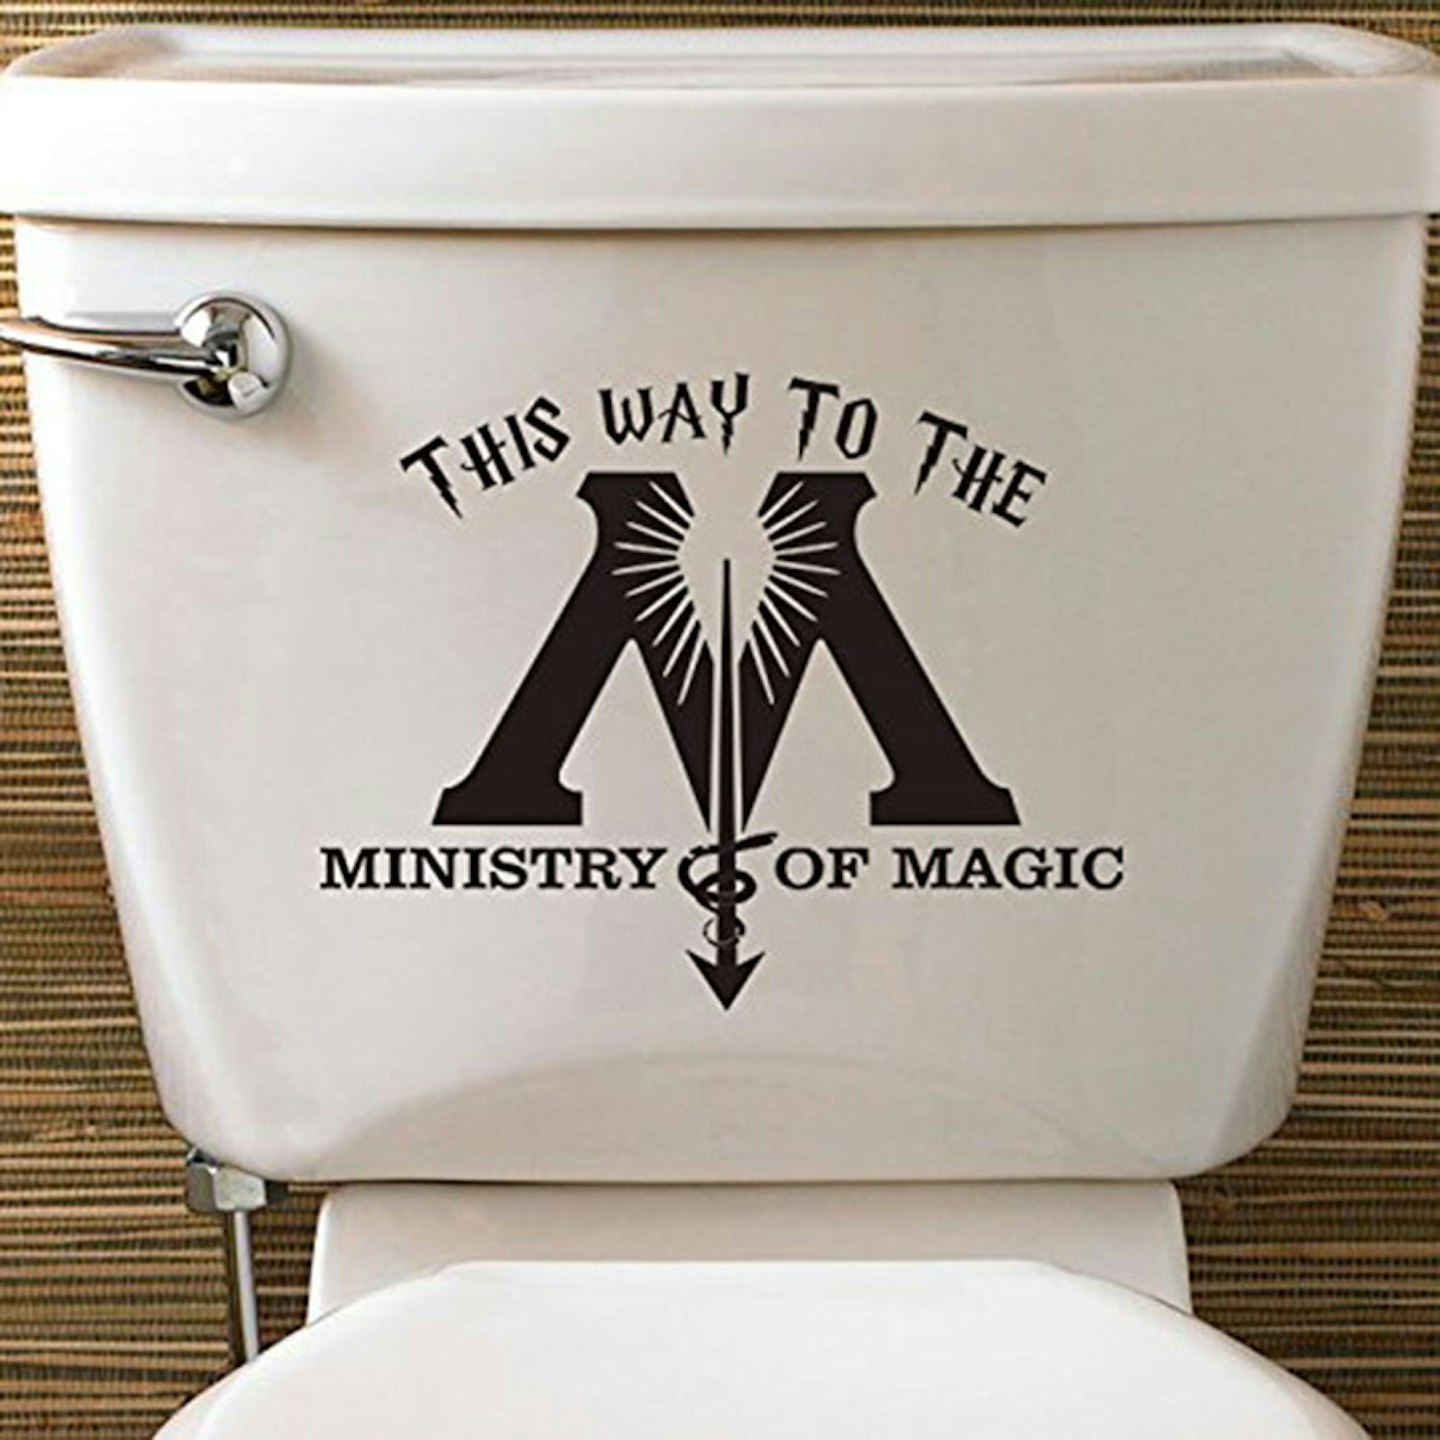 Ministry of Magic Vinyl Sticker, £1.99